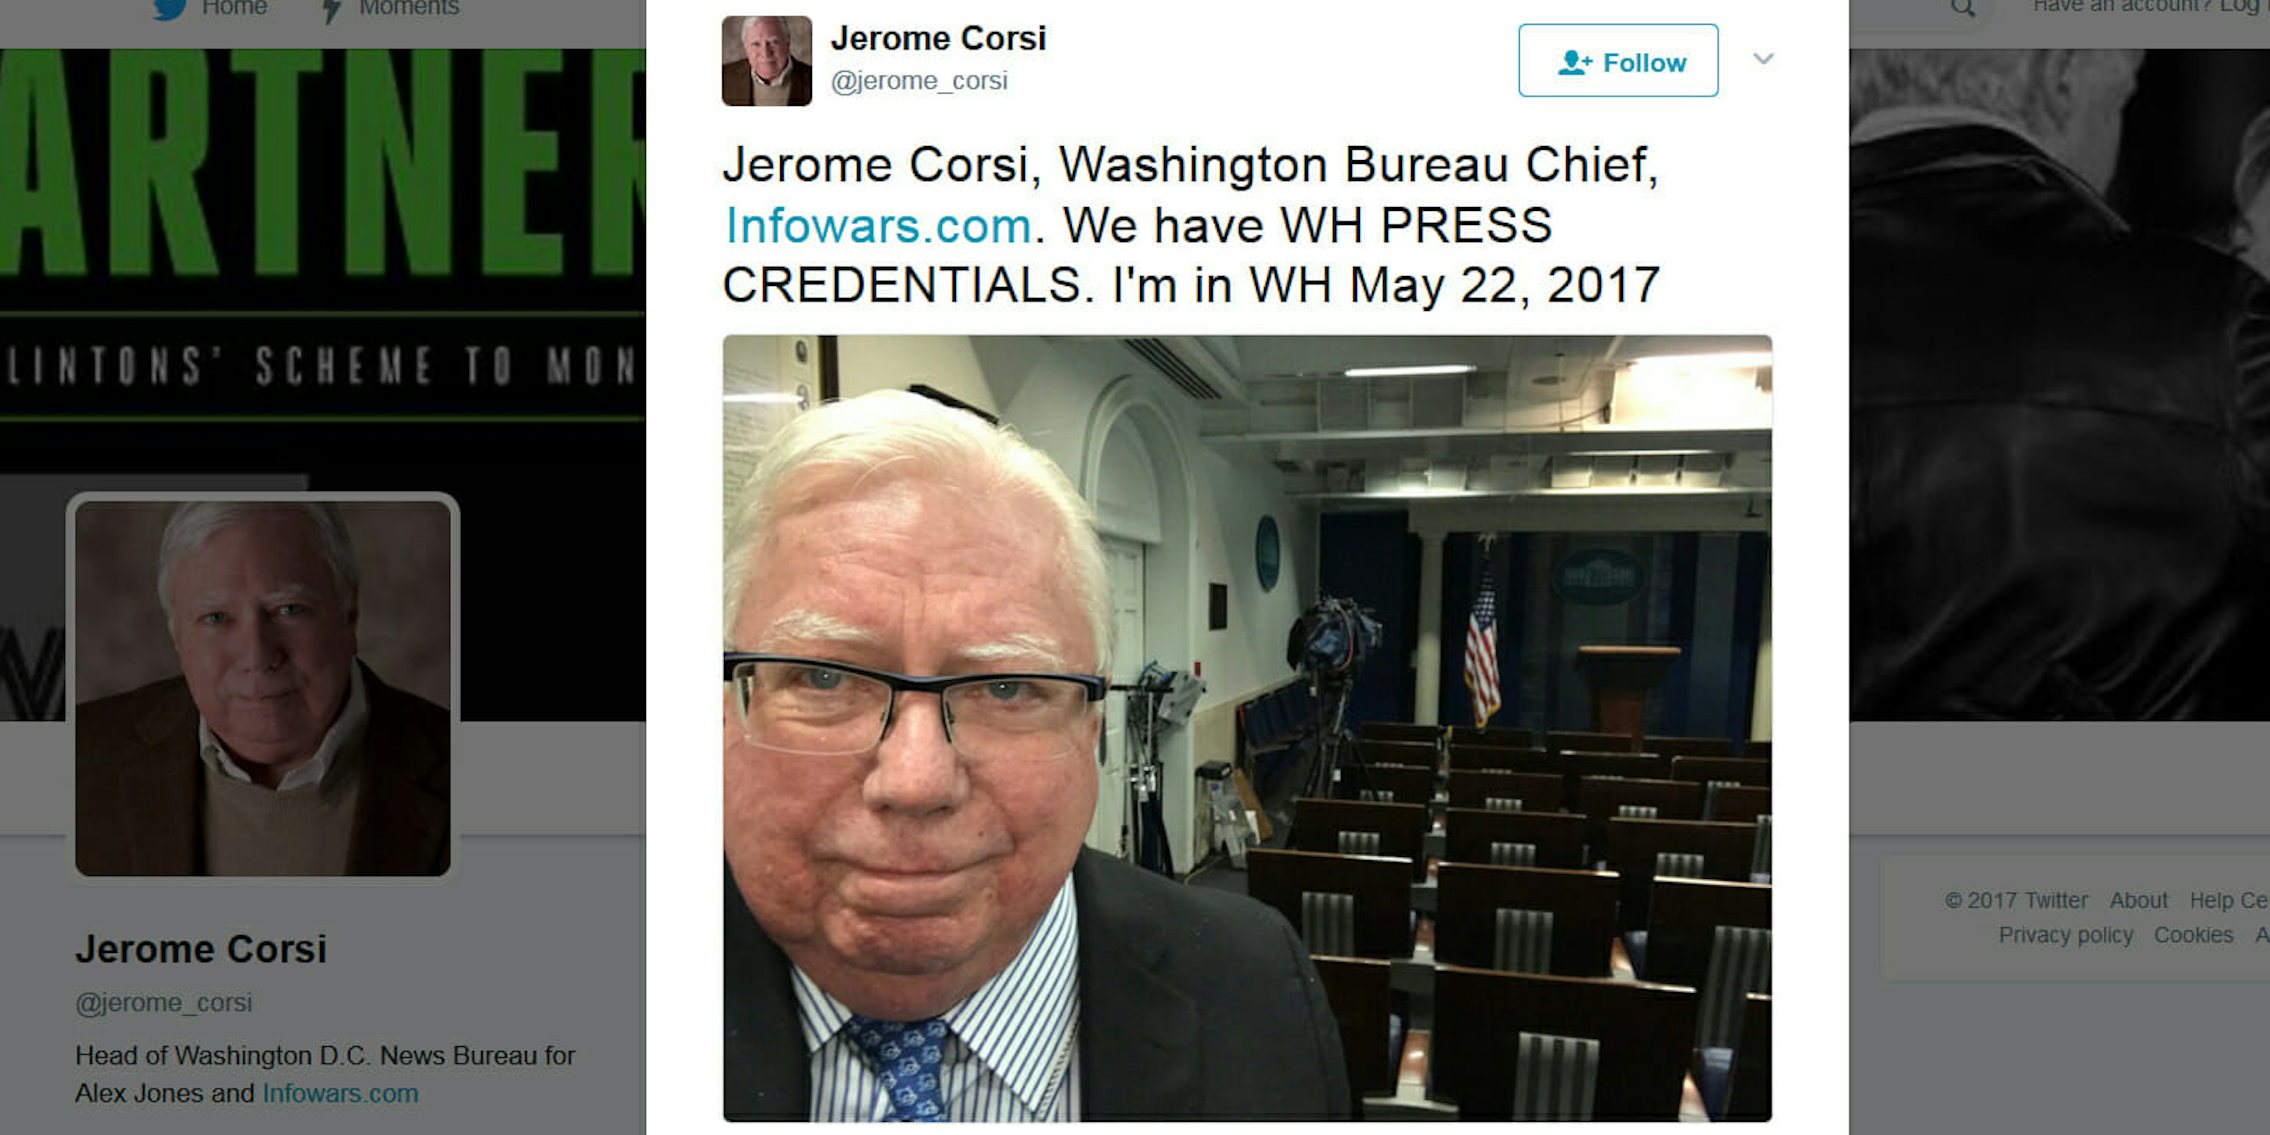 Jerome Corsi, Washington Bureau Chief of Infowars